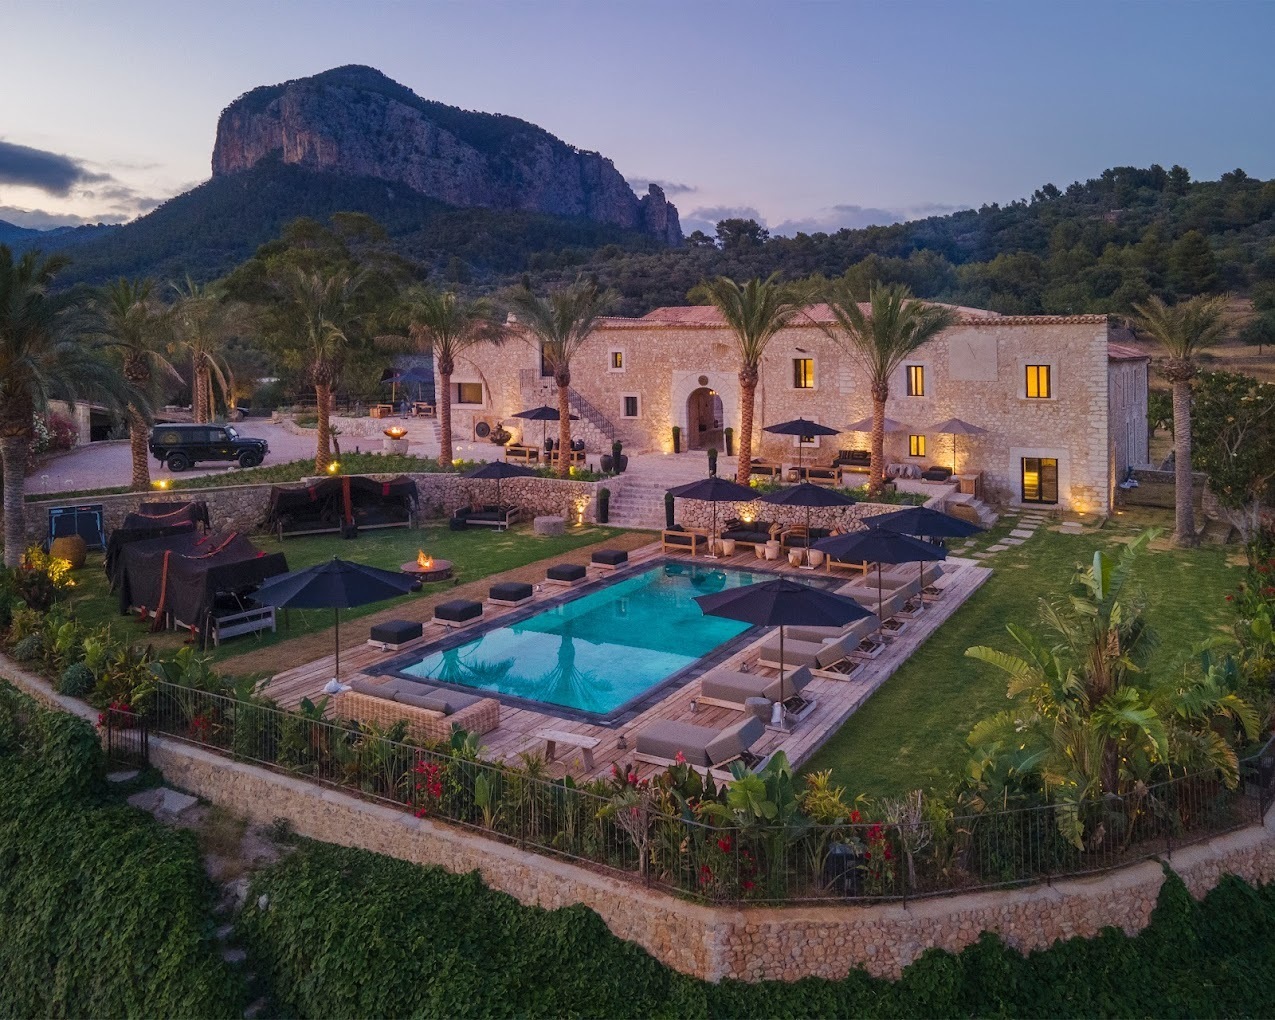 Insider Villas provides luxurious villas for rent in top holiday destinations.